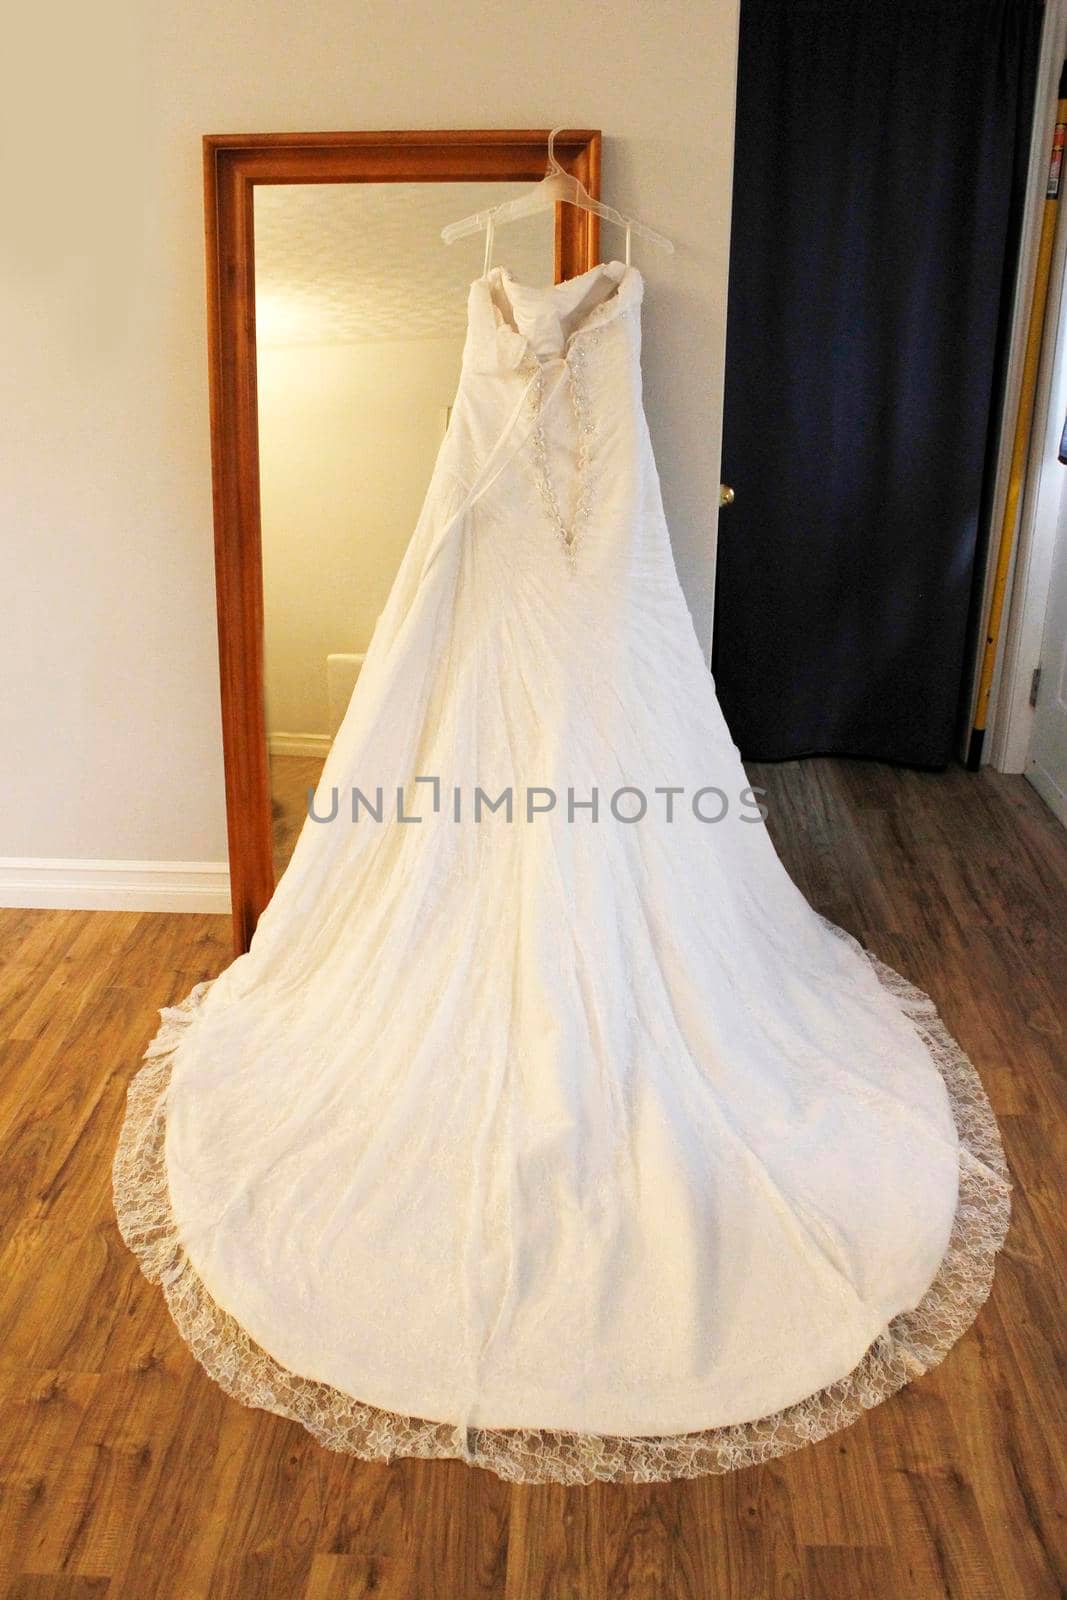 A beautiful wedding dress hangs on a mirror  by rustycanuck